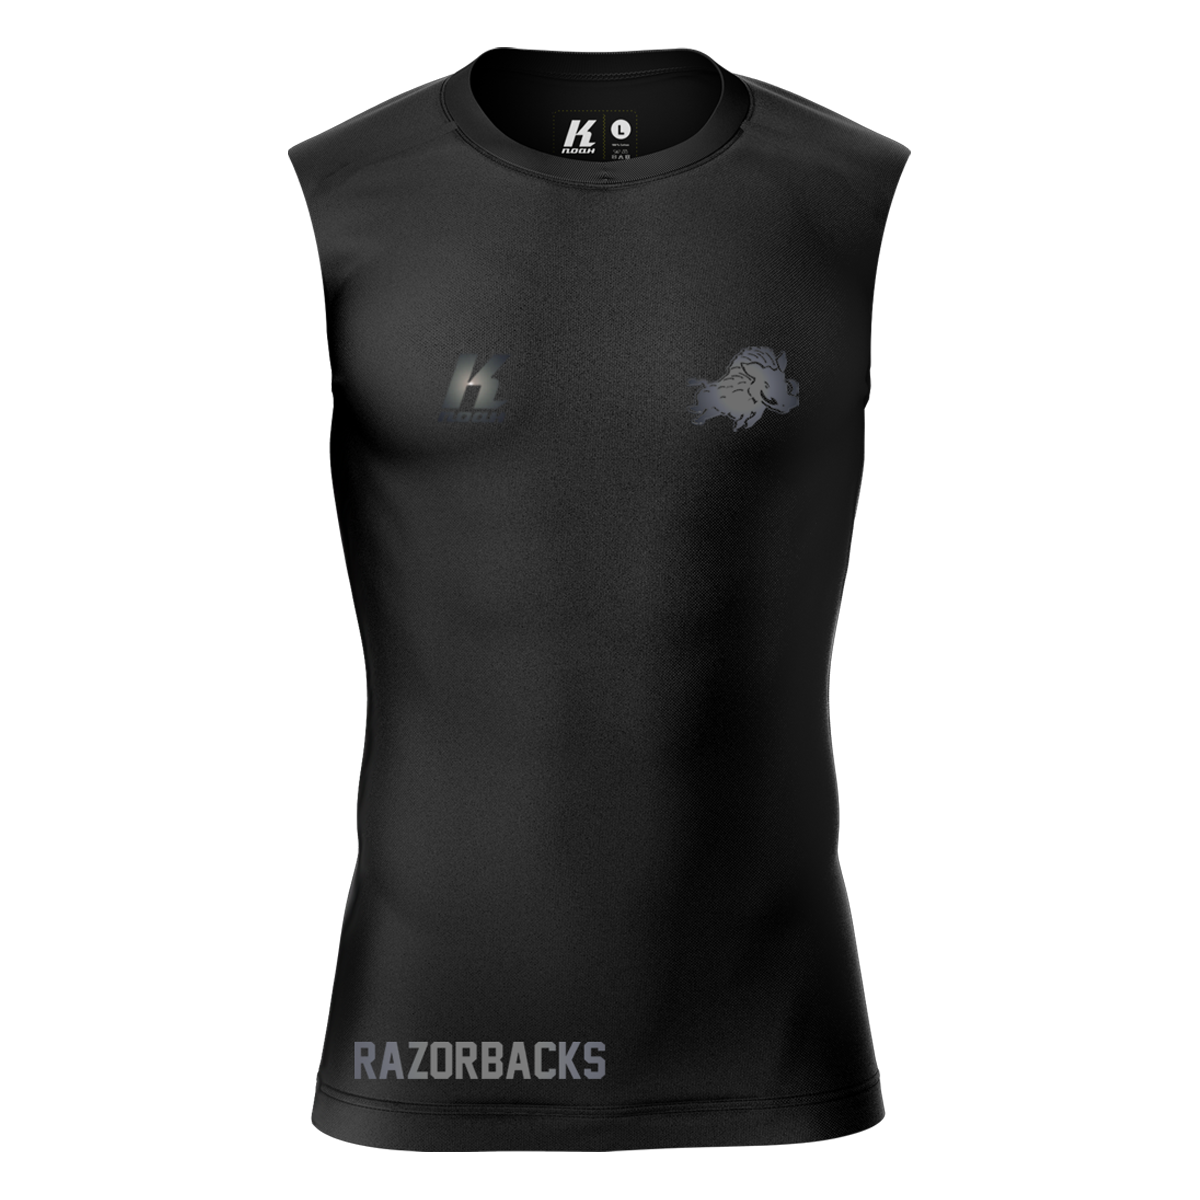 Razorbacks "Blackline" K.Tech Compression Sleeveless Shirt